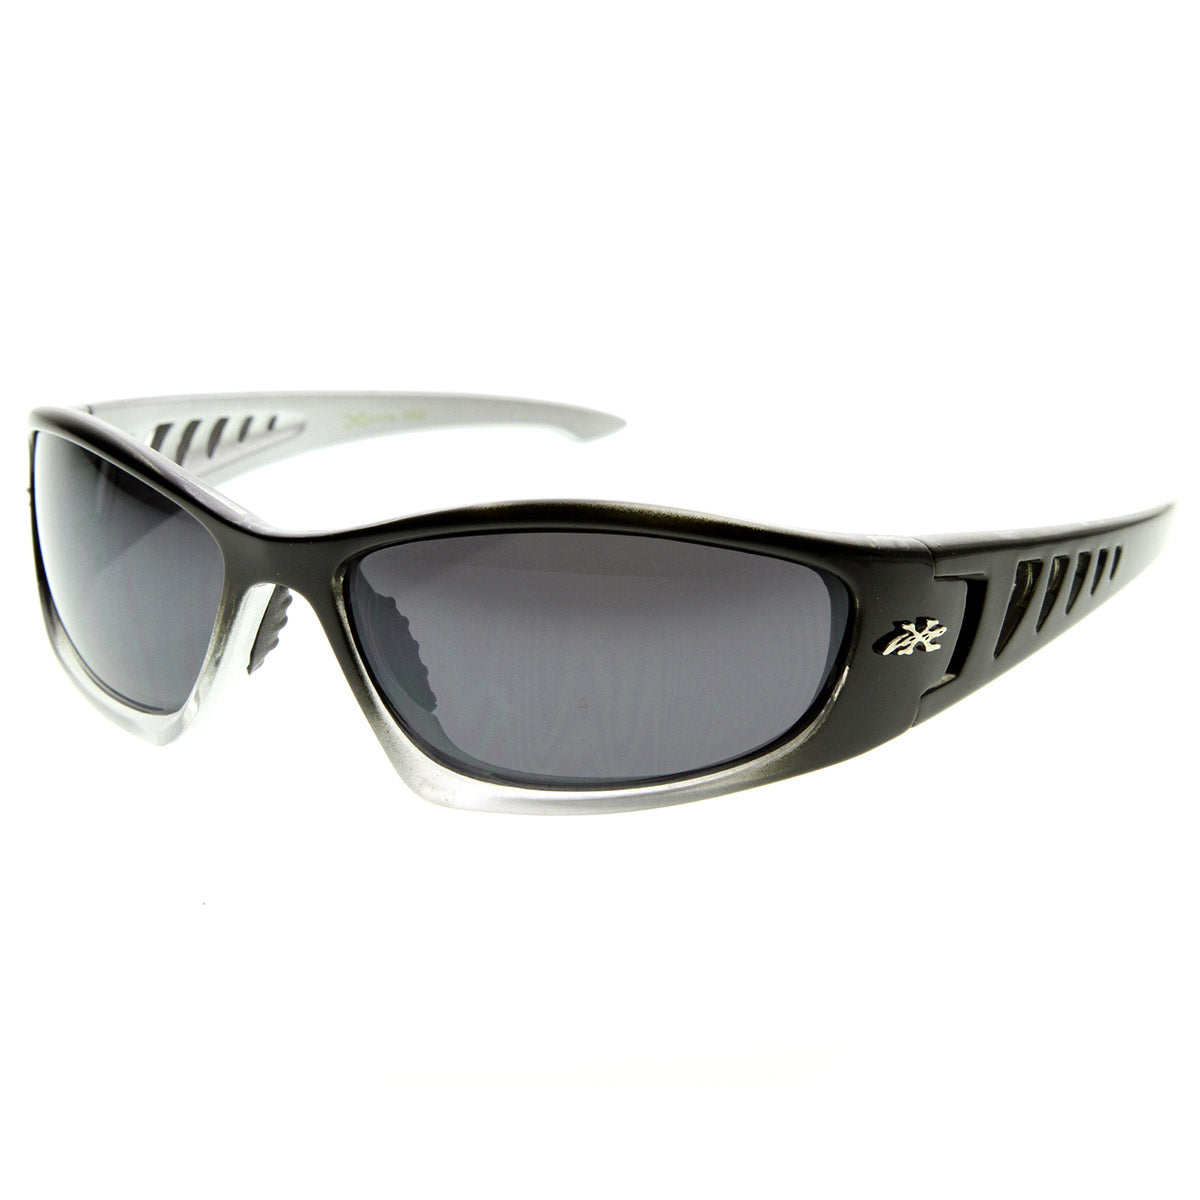 X Loop Brand Eyewear Large Sports Wraparound Xloop Sunglasses W Venti Sunglass La